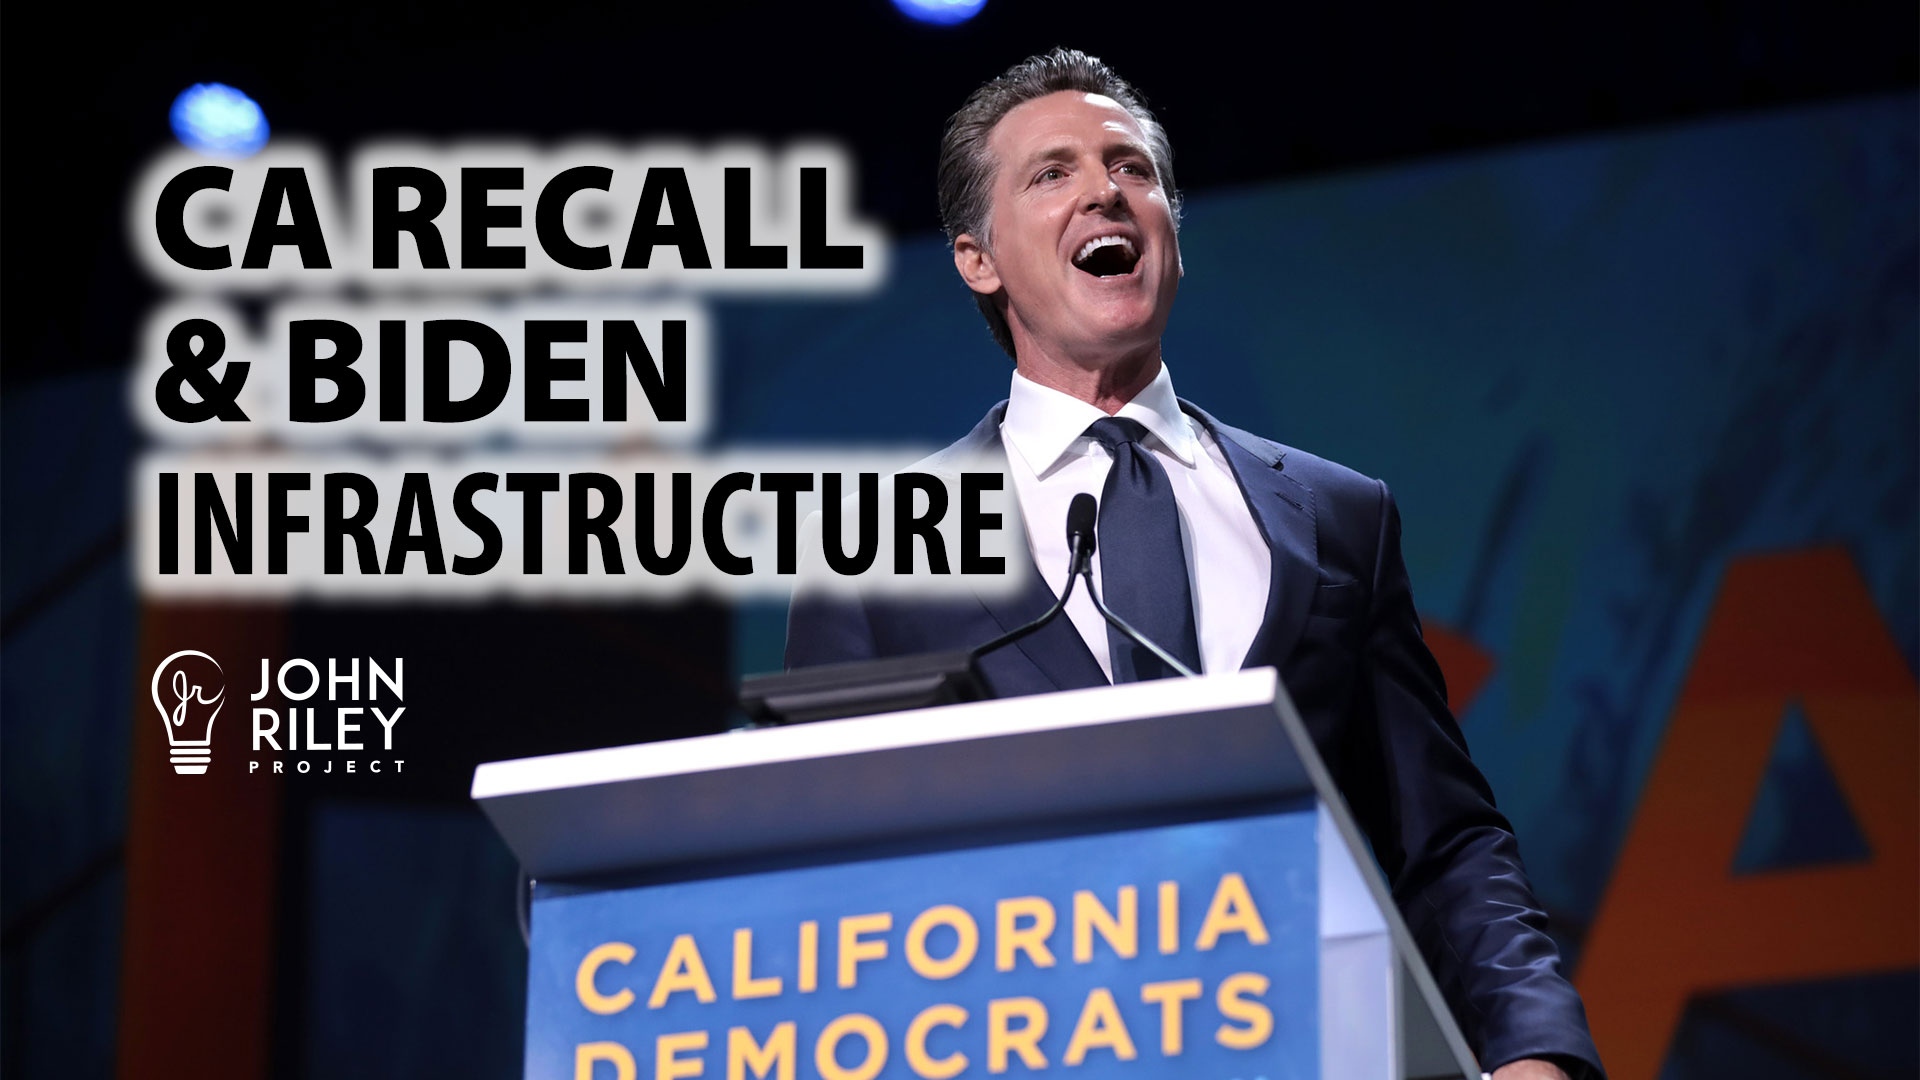 California Recall, Gavin Newsom, Biden, Infrastructure, John Riley Project, JRP0249